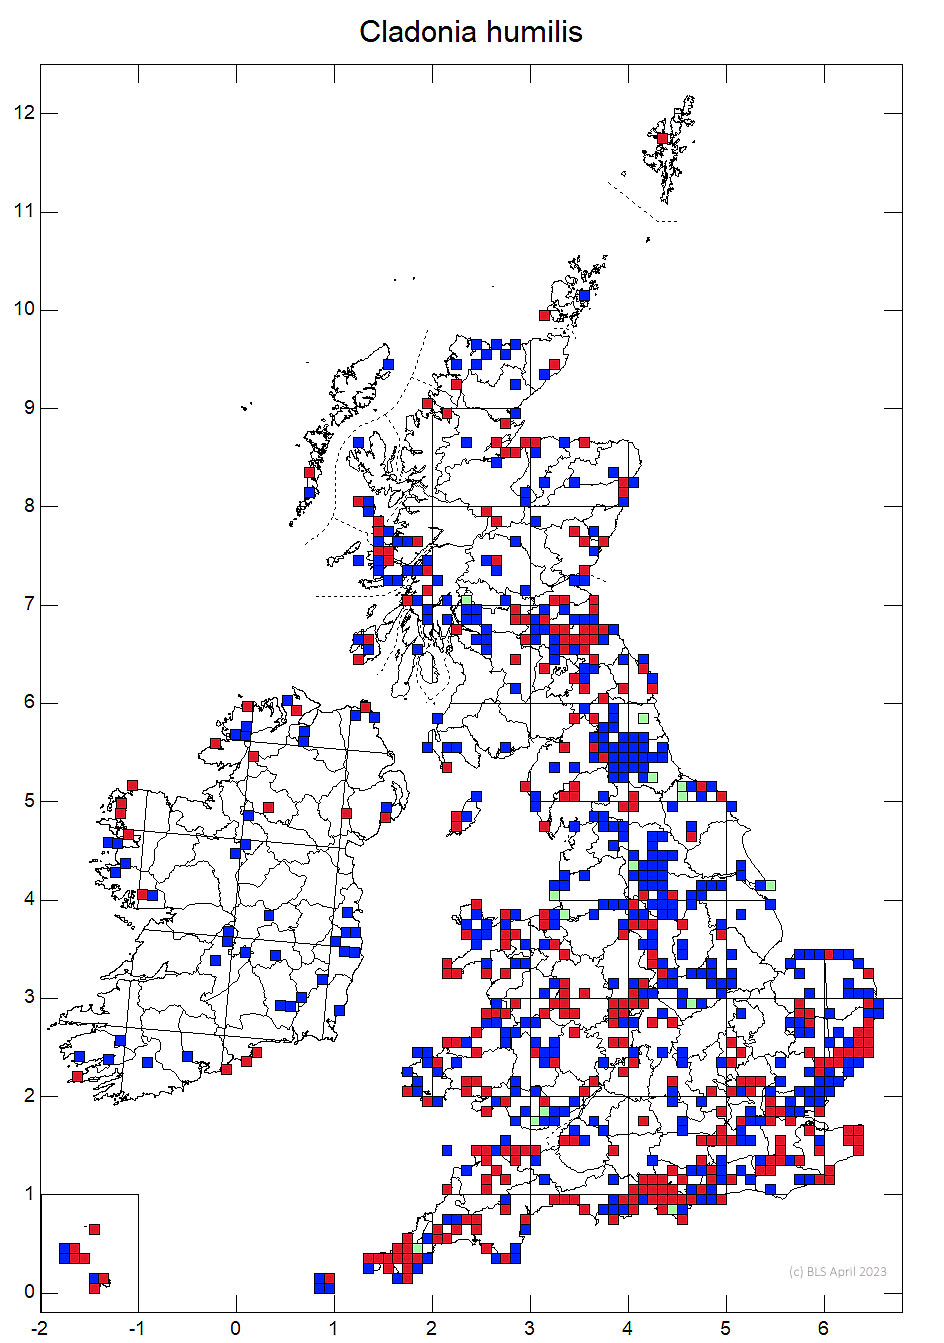 Cladonia humilis 10km sq distribution map